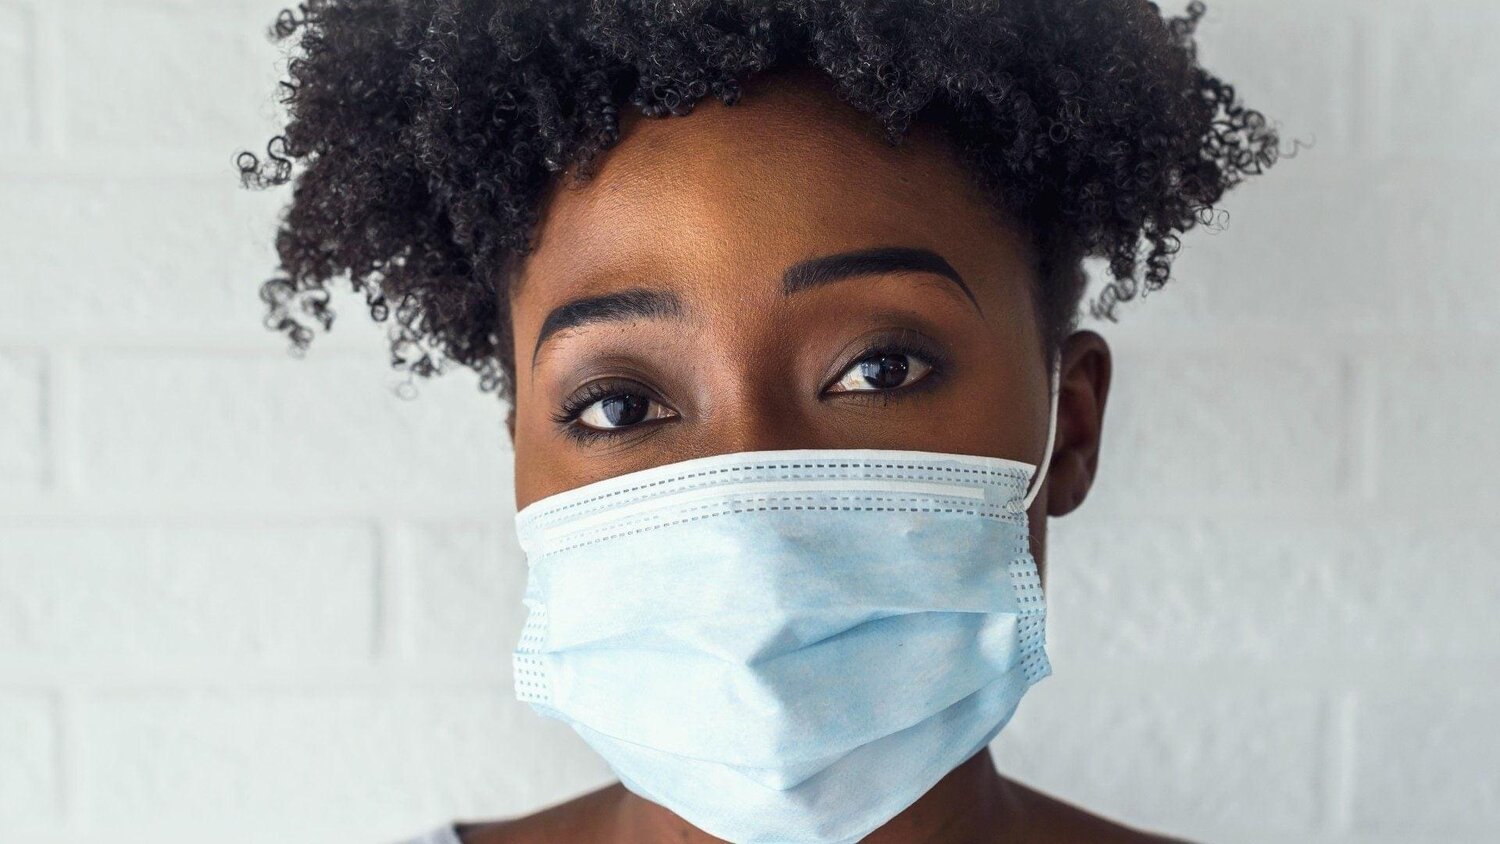 Black woman wearing a medivcal mask